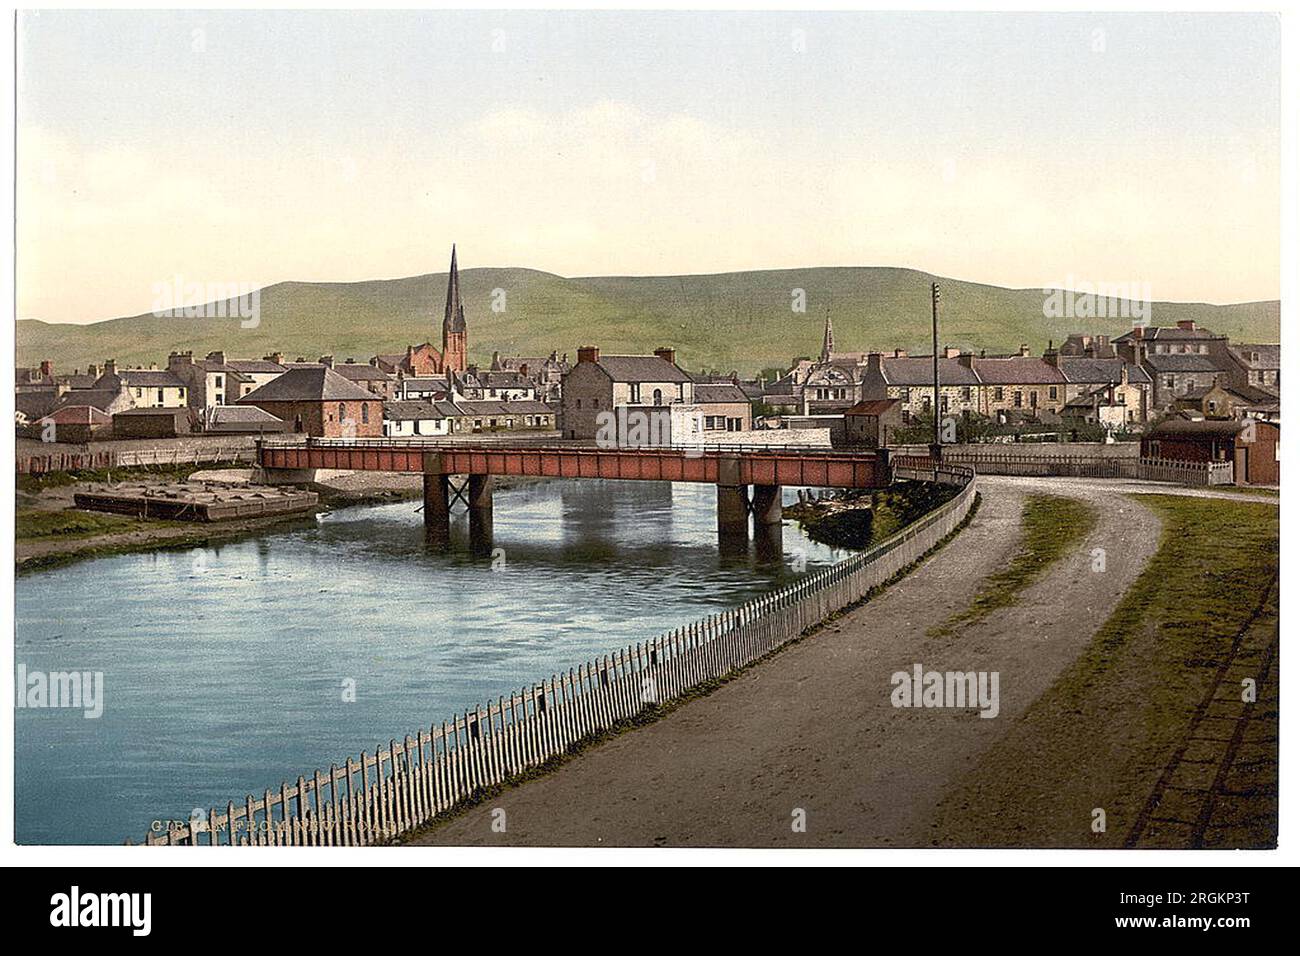 vintage photochrom prints of scotland Stock Photo